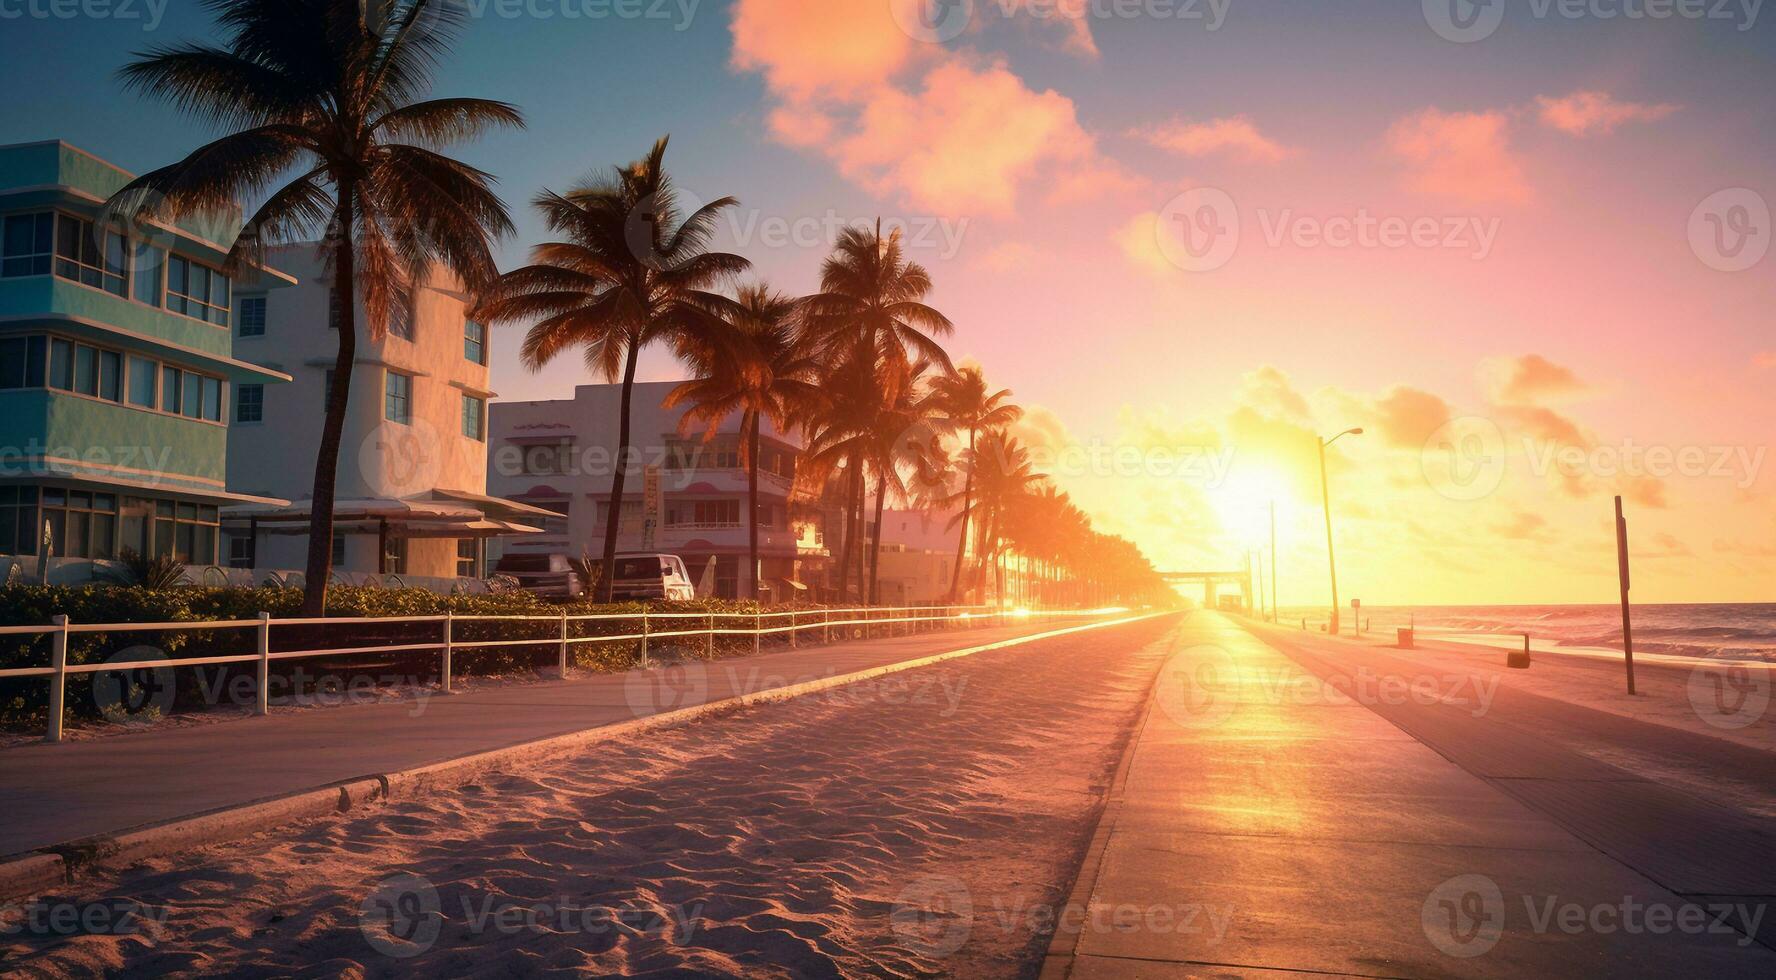 AI generated miami beach scene, miami street with palms, palms in the miami photo